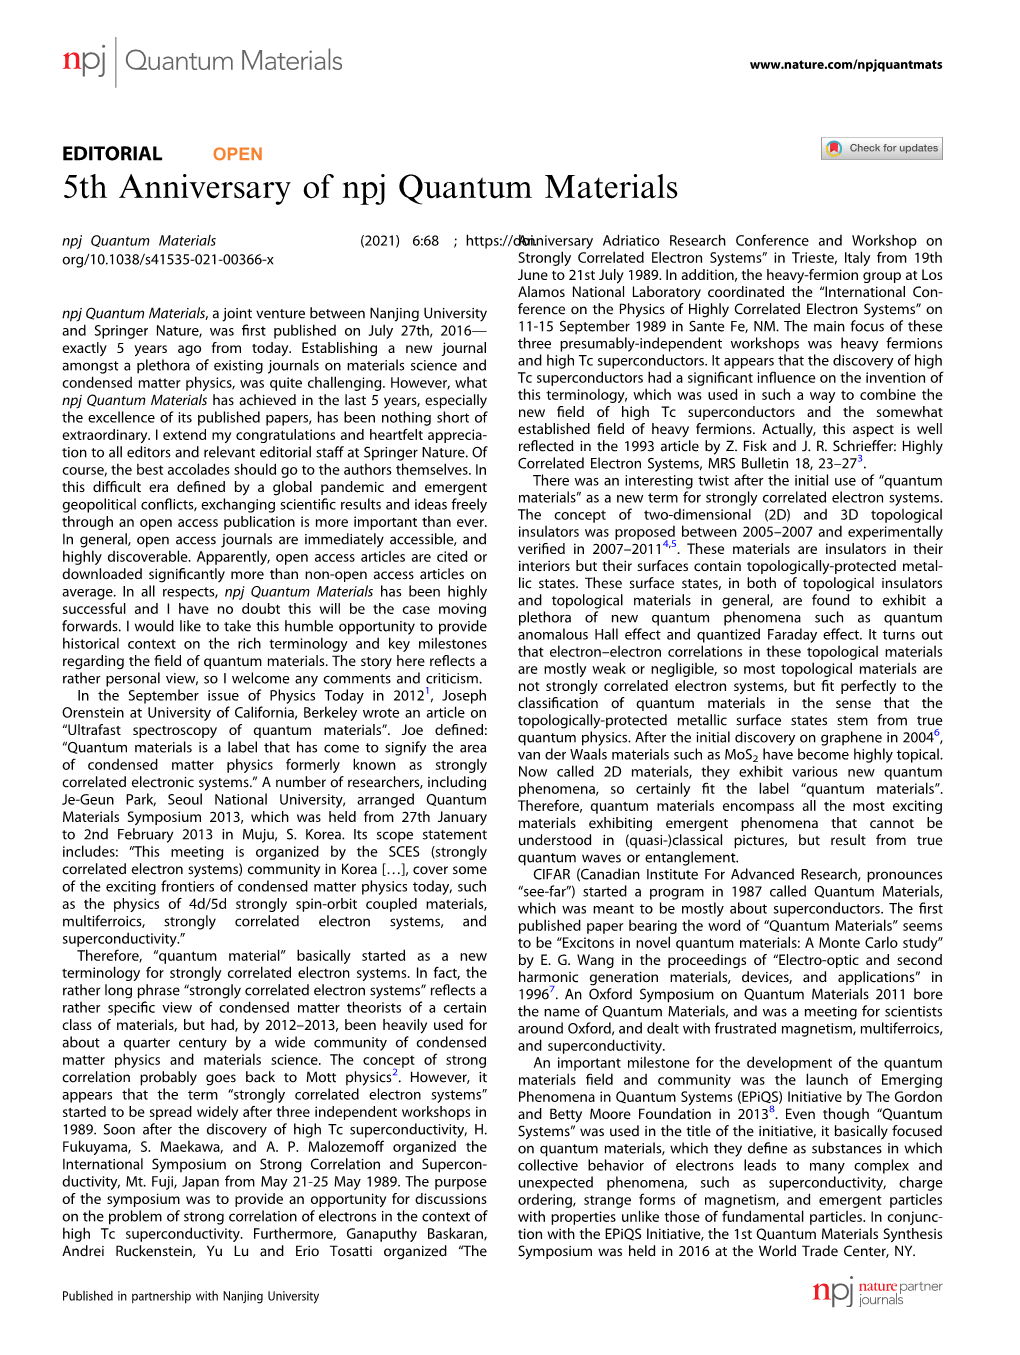 5Th Anniversary of Npj Quantum Materials